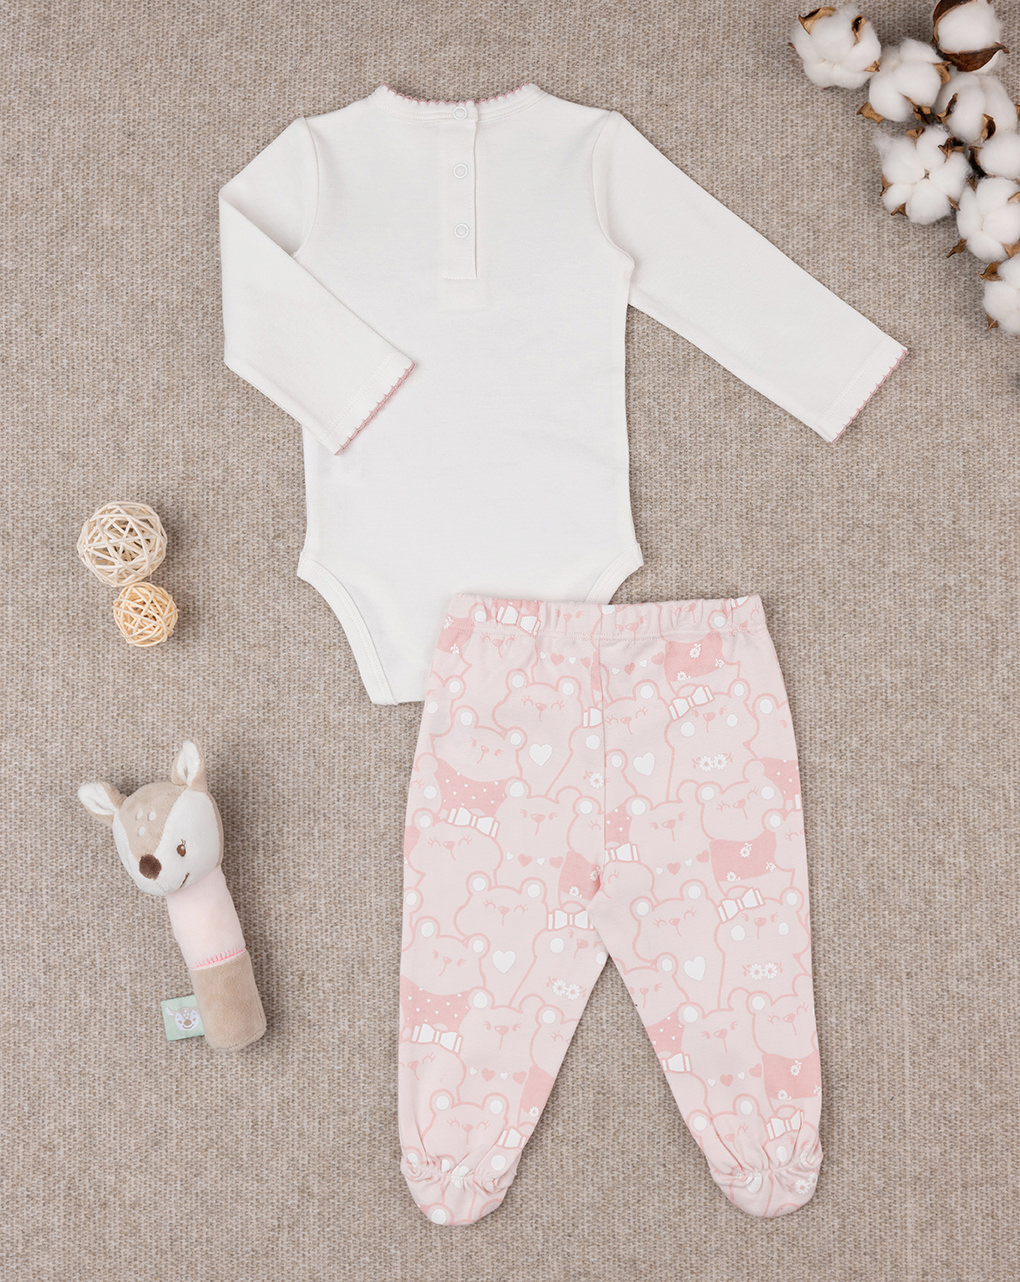 Conjunto rosa/beige para bebé niña - Prénatal